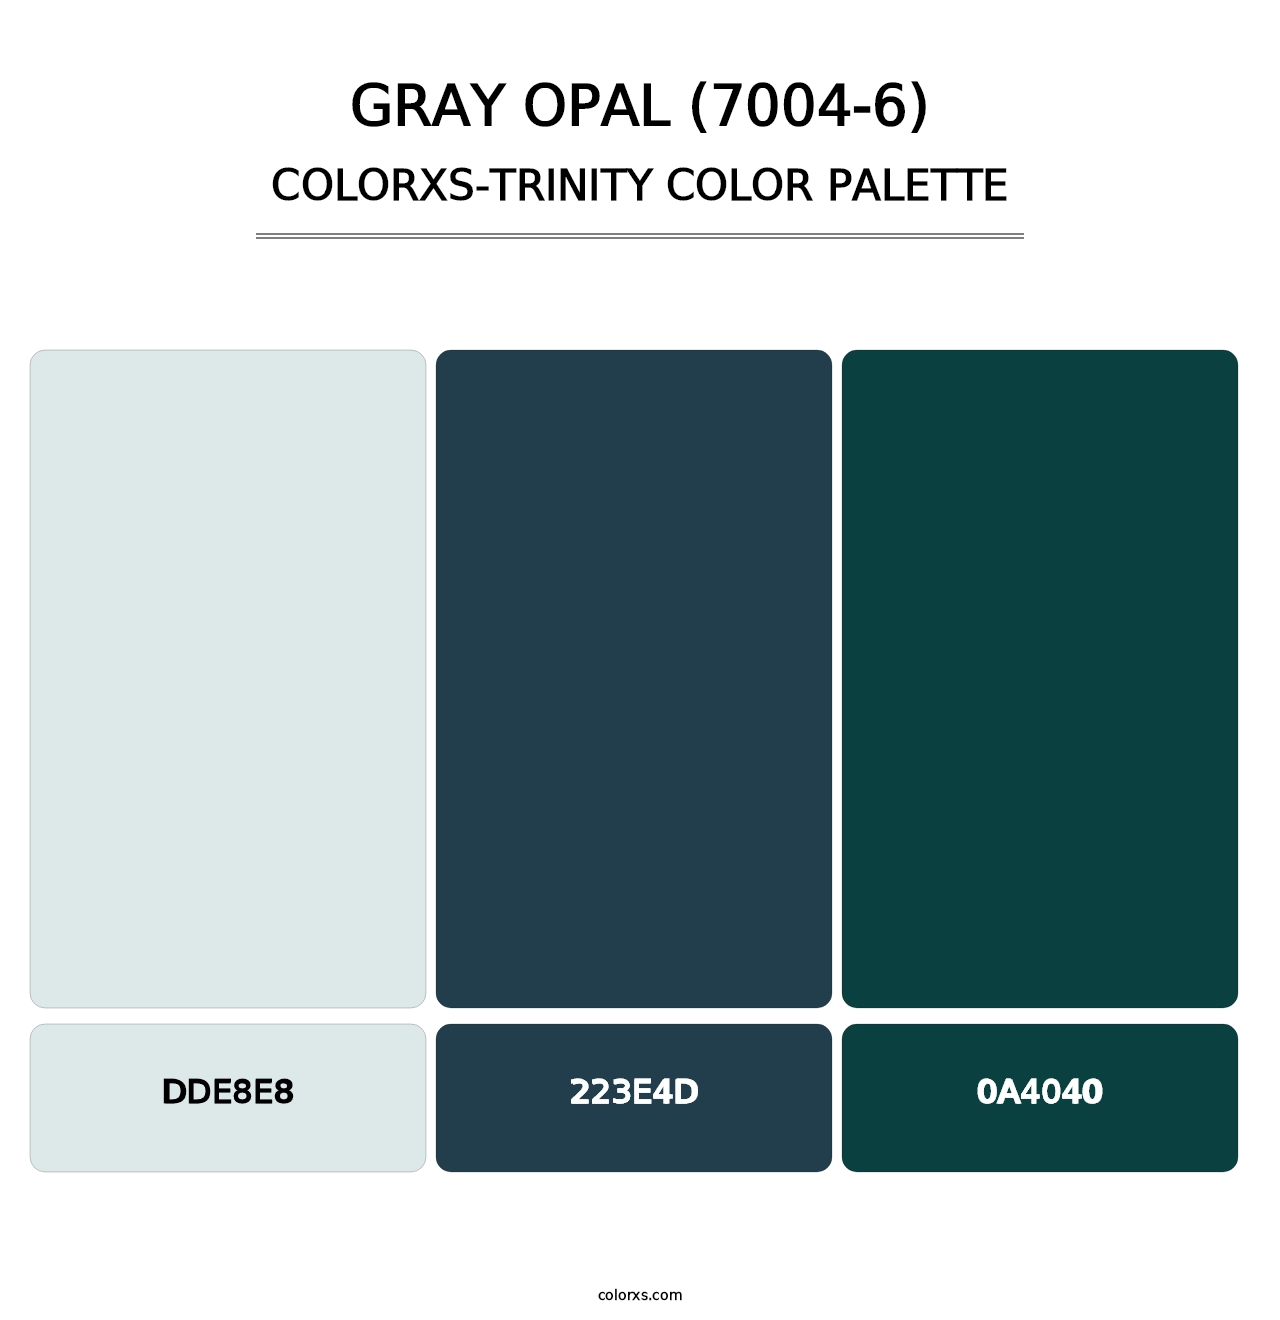 Gray Opal (7004-6) - Colorxs Trinity Palette